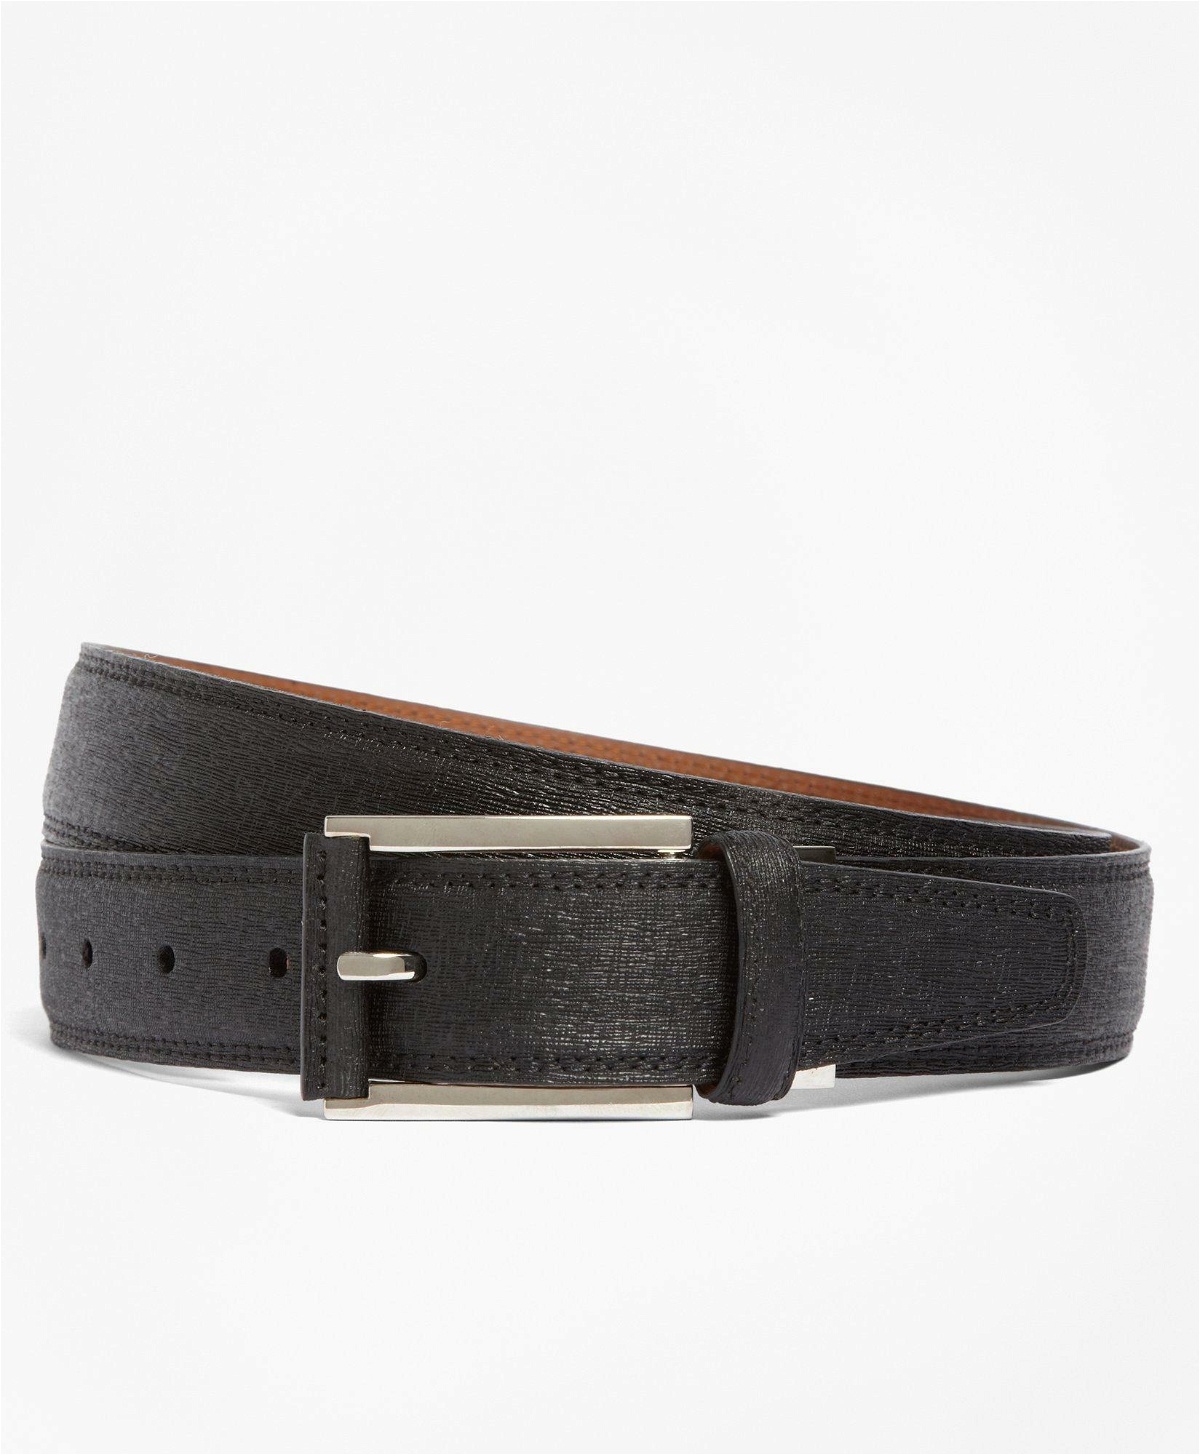 Brooks Brothers Men's Stitched Leather Belt